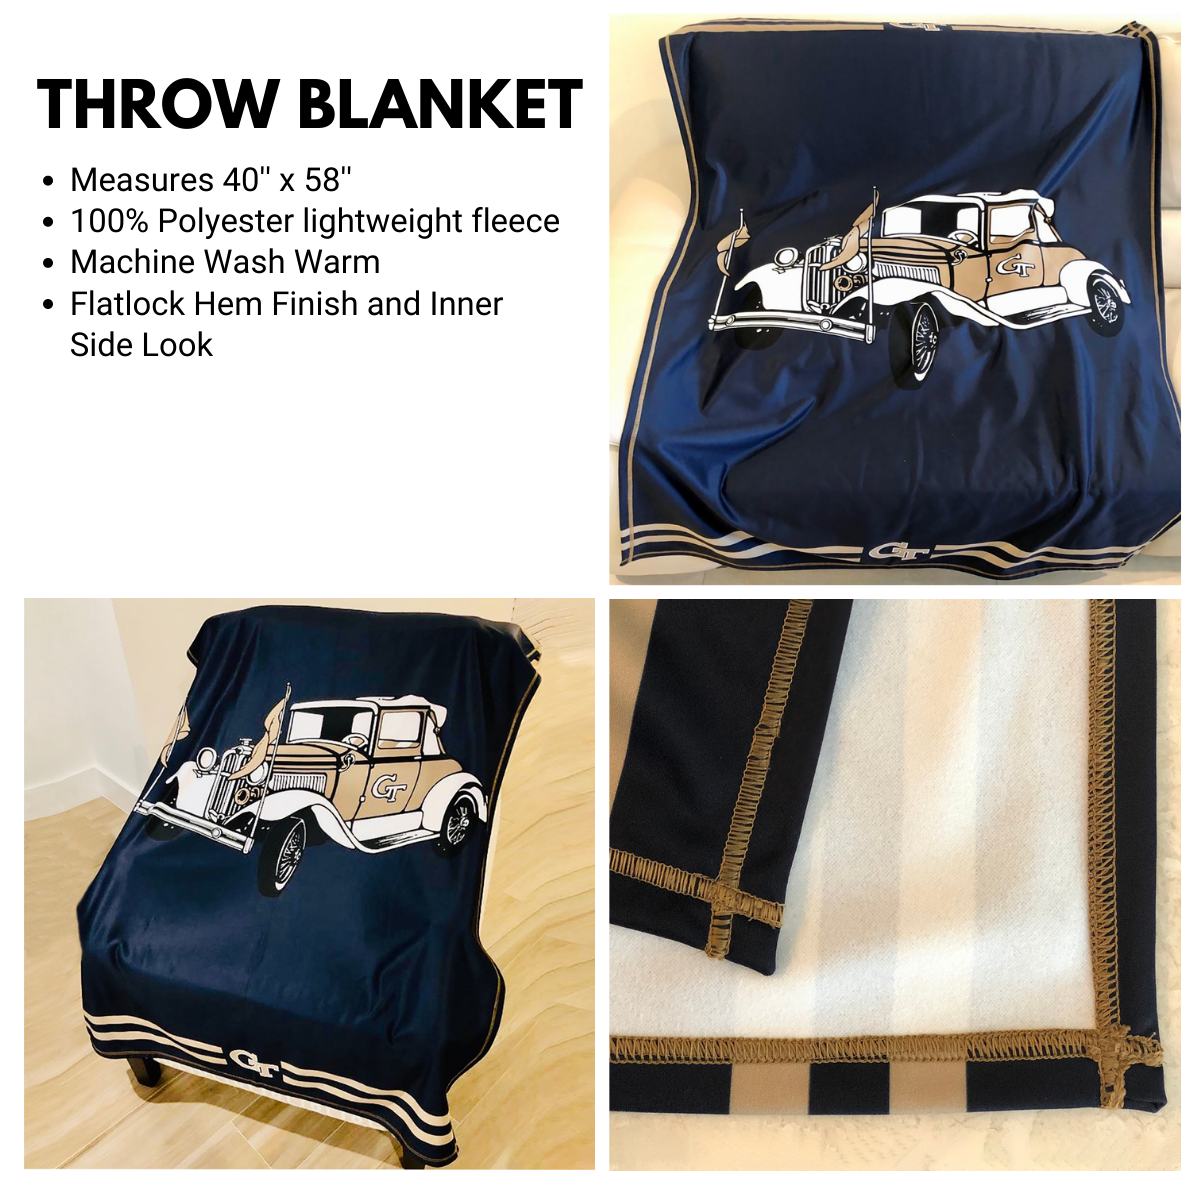 Troy Trojans Game Day Soft Premium Fleece Red Throw Blanket 40 x 58 Logo and Stripes